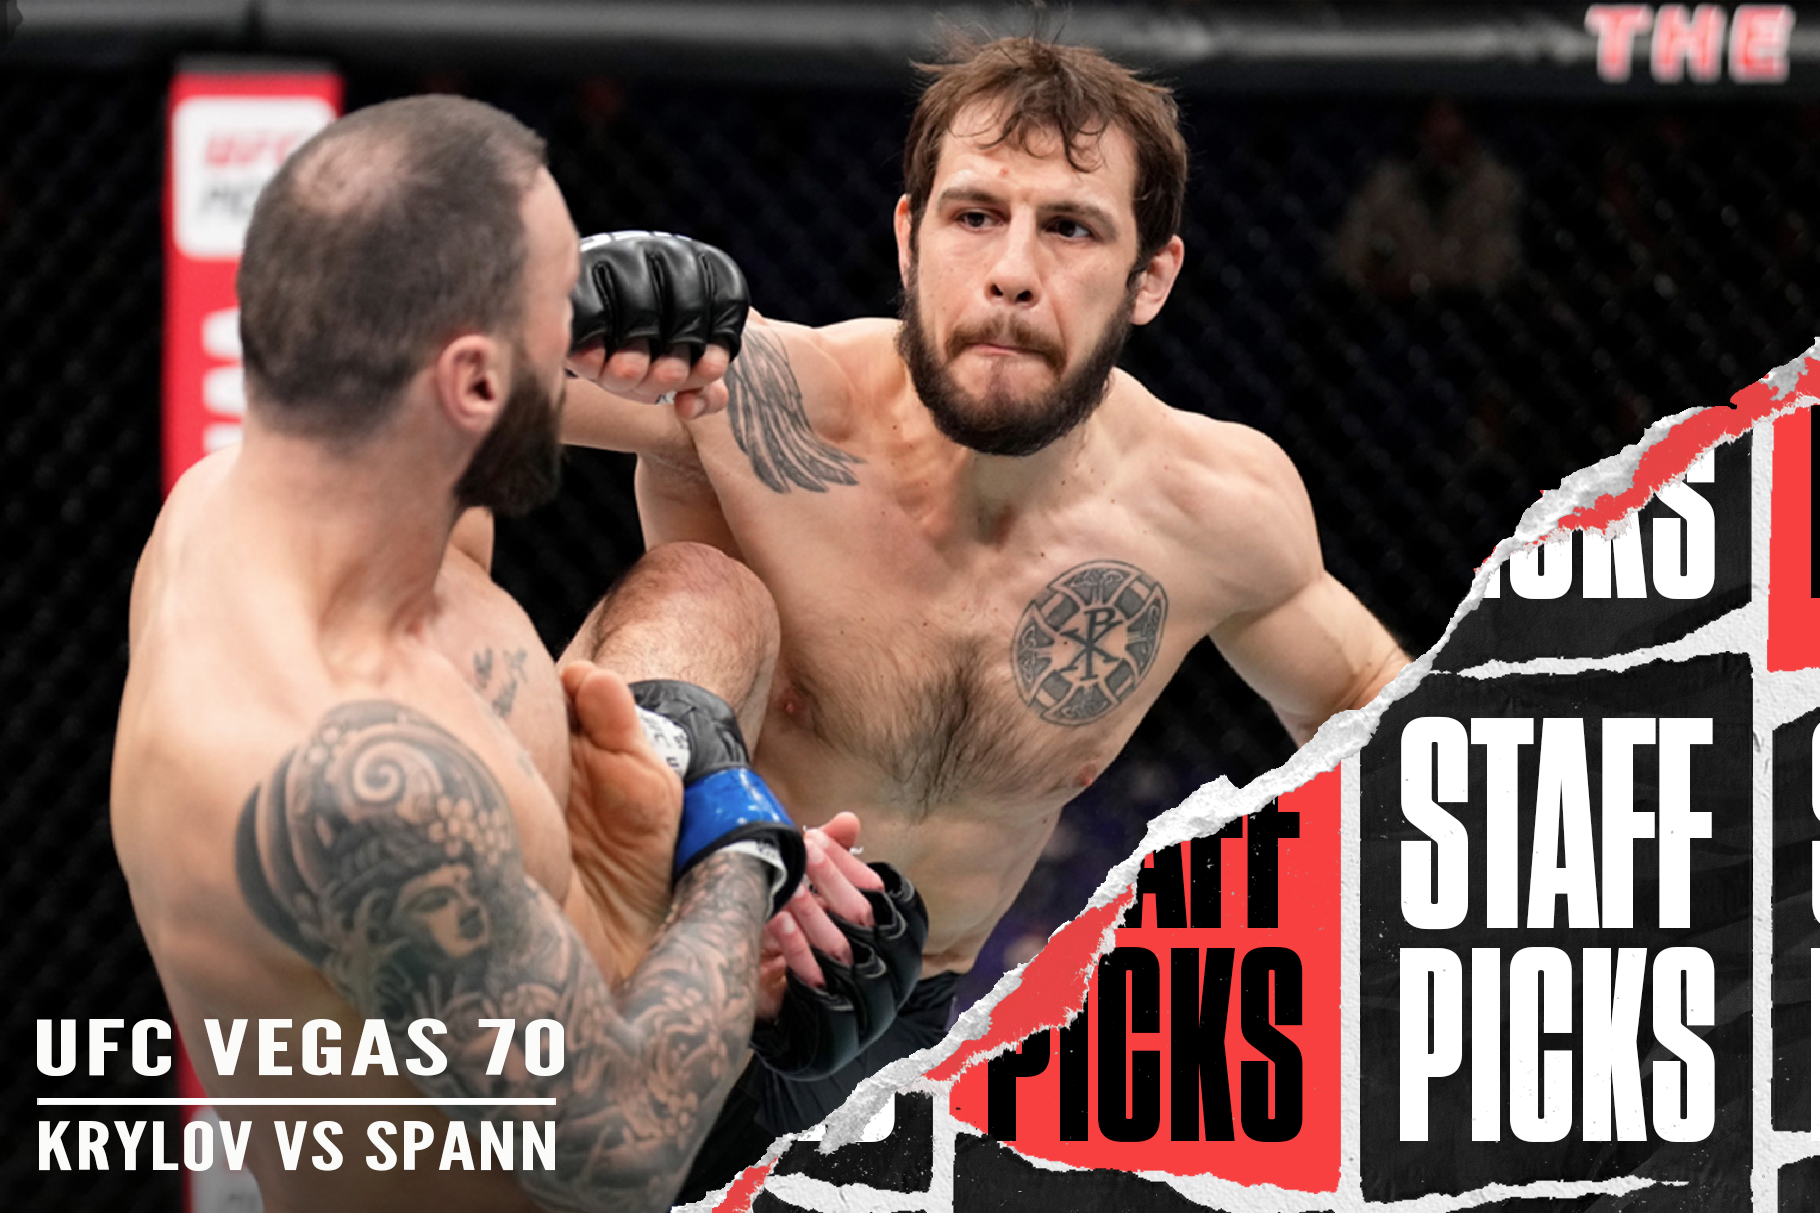 UFC Fight Night, UFC Vegas 70, Nikita Krylov vs Ryan Spann, Staff Picks and Predictions, Bloody Elbow Feature, 